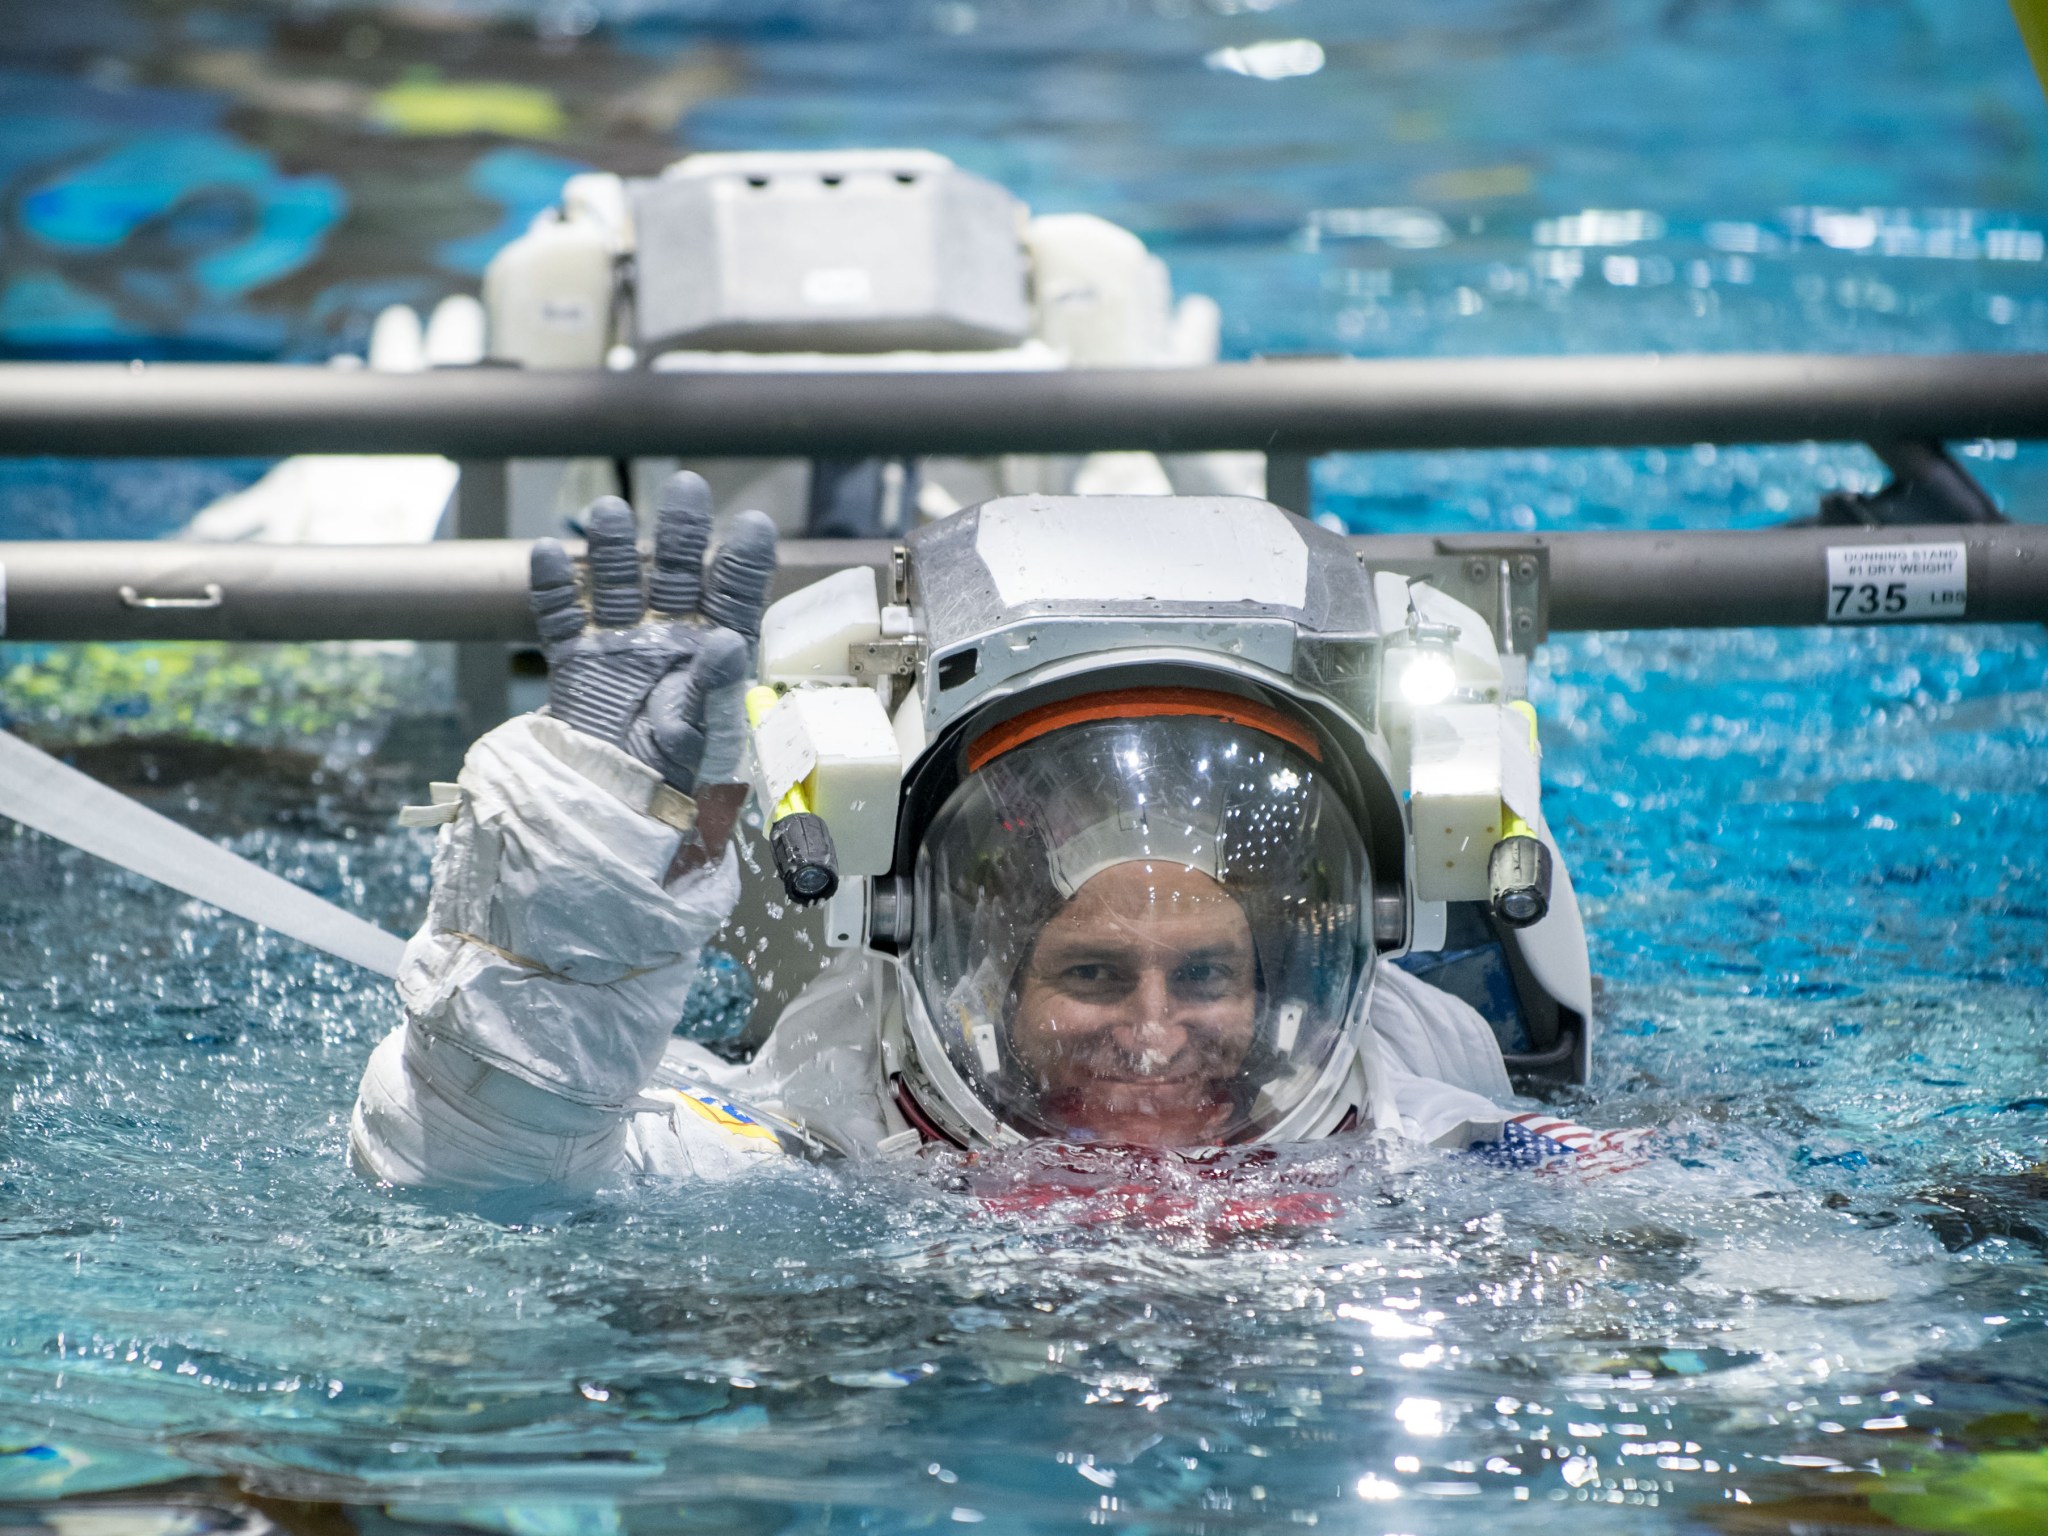 NASA astronaut Morgan enters the Neutral Buoyancy Lab in preparation for space flight activities.